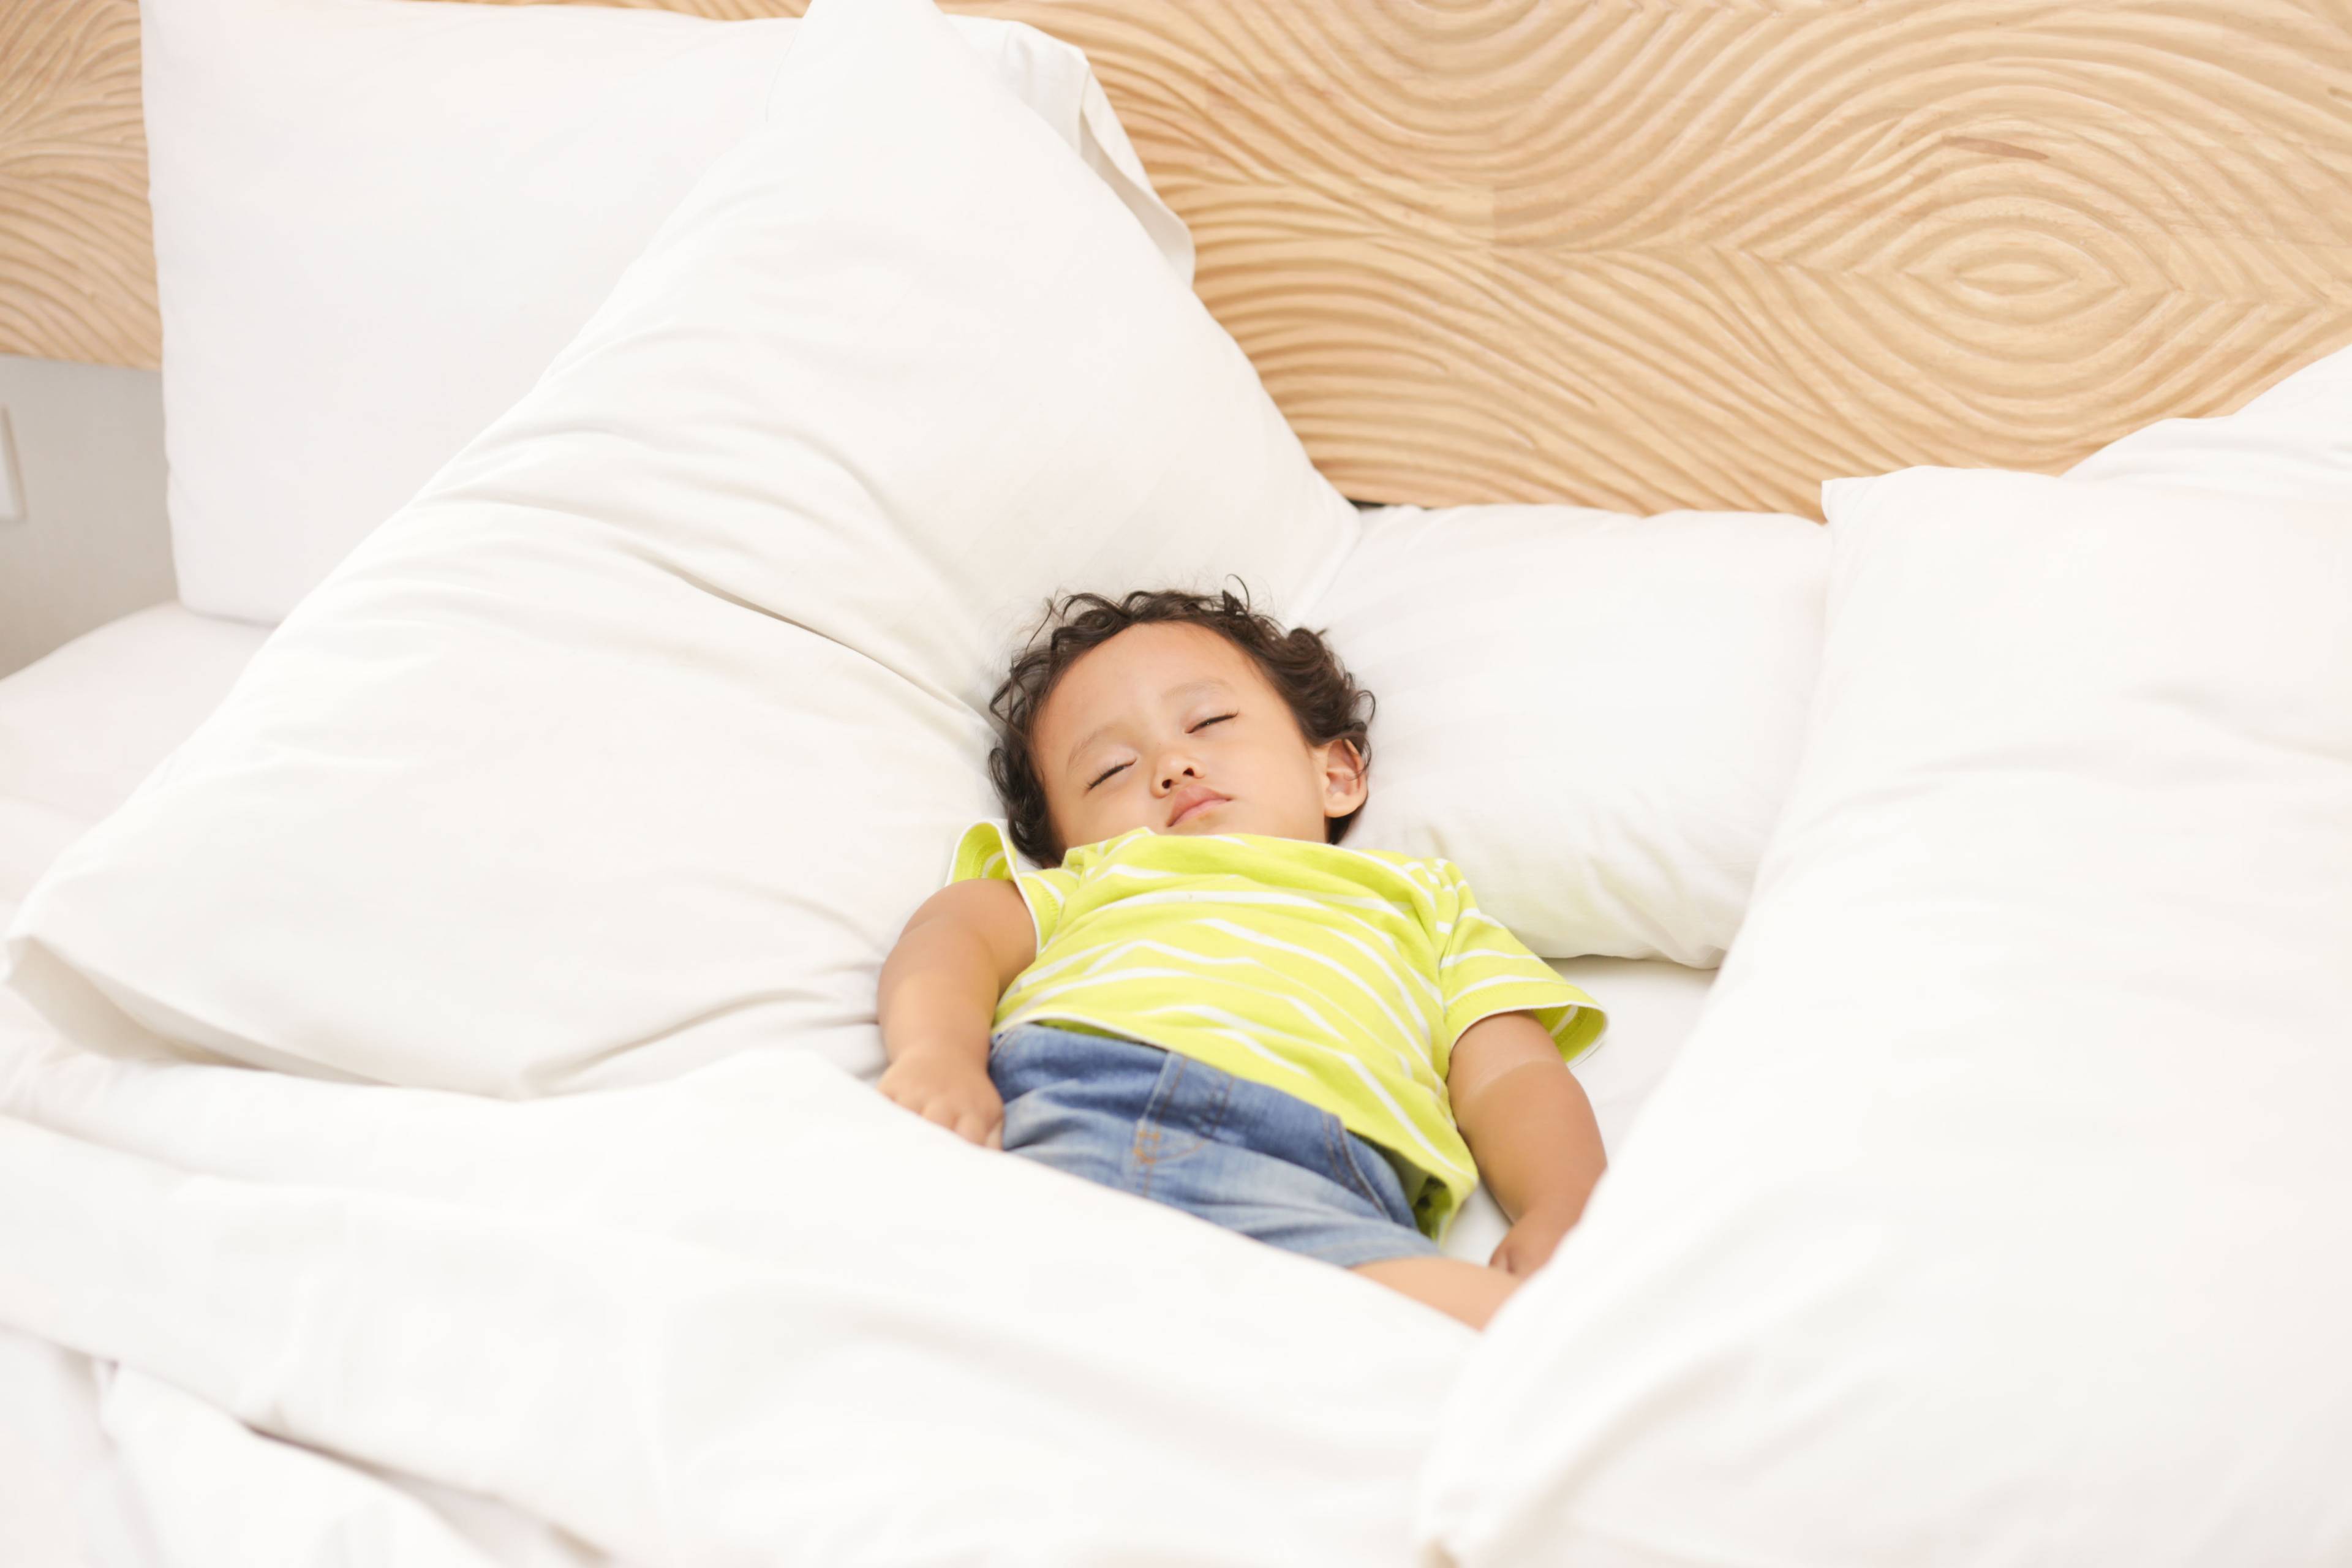 Kenapa Anak Perlu Tidur Sebelum Jam 9?